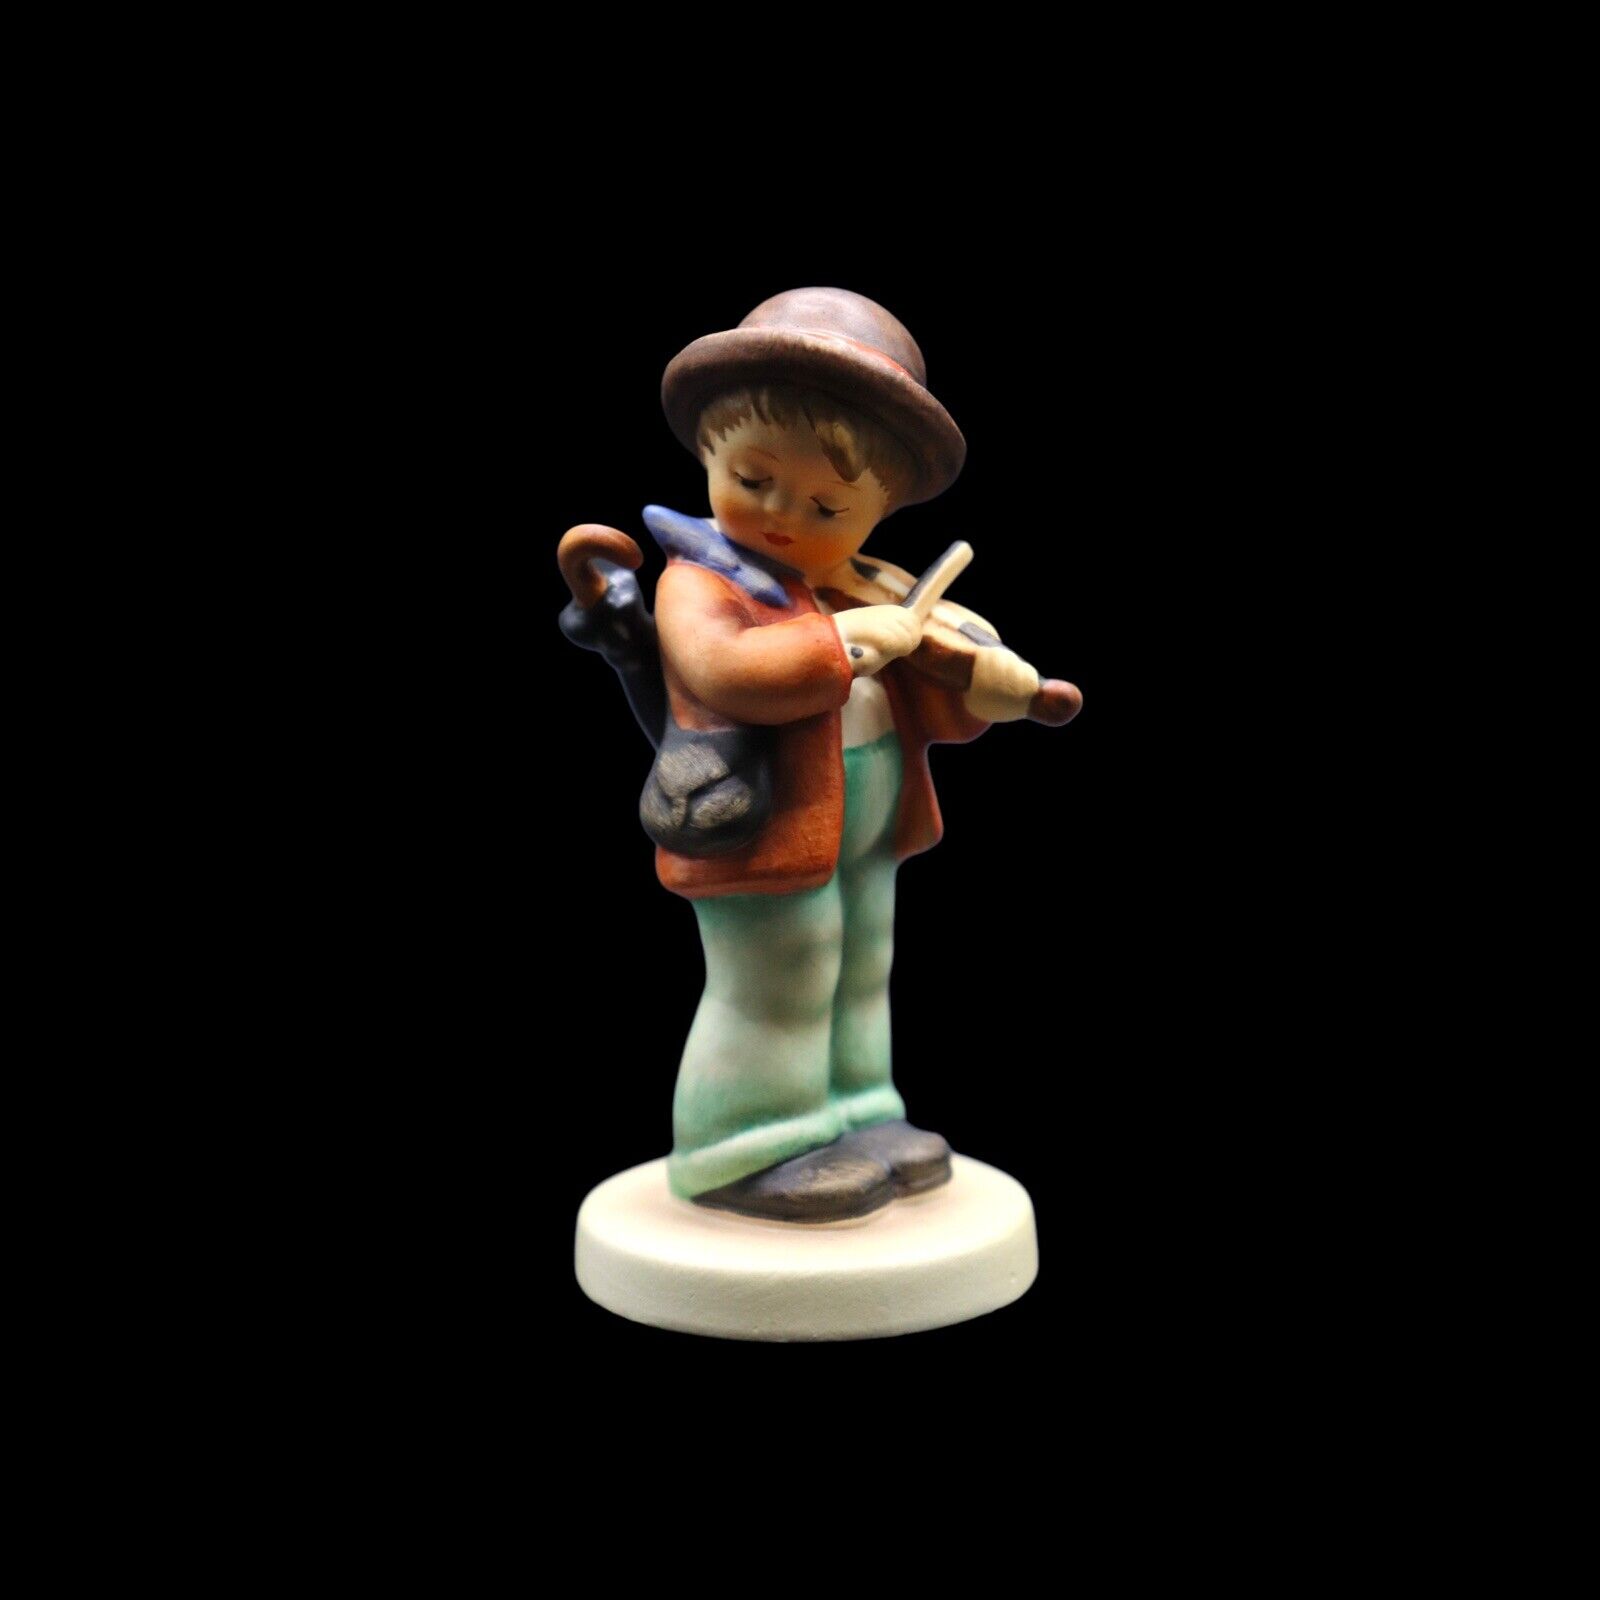 Goebel Hummel “Little Fiddler” #2/4/0 Figurine with Original Box and COA - TMK6